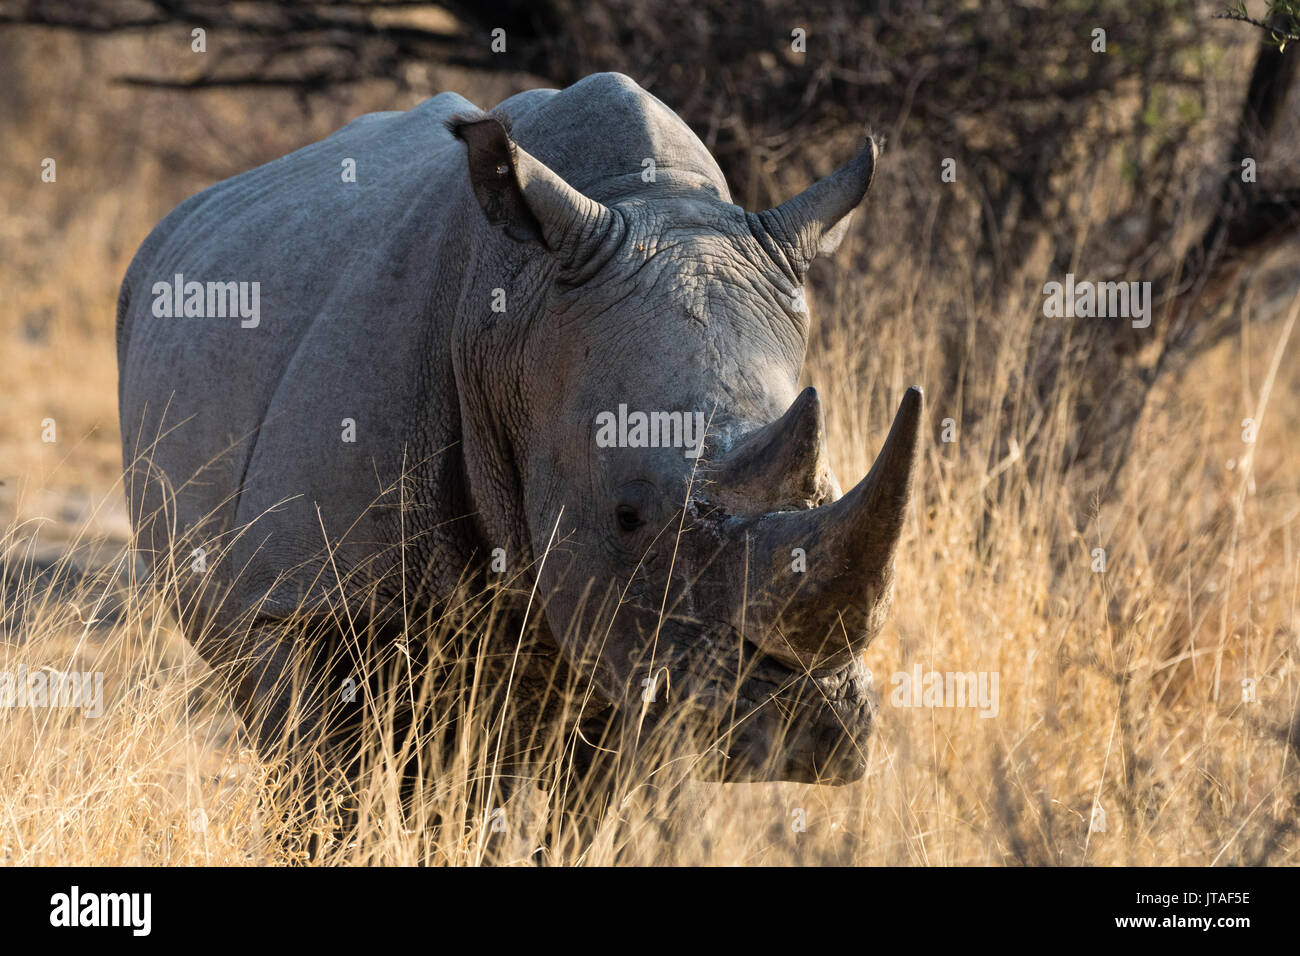 White rhinoceros (Ceratotherium simum) looking at the camera, Botswana, Africa Stock Photo